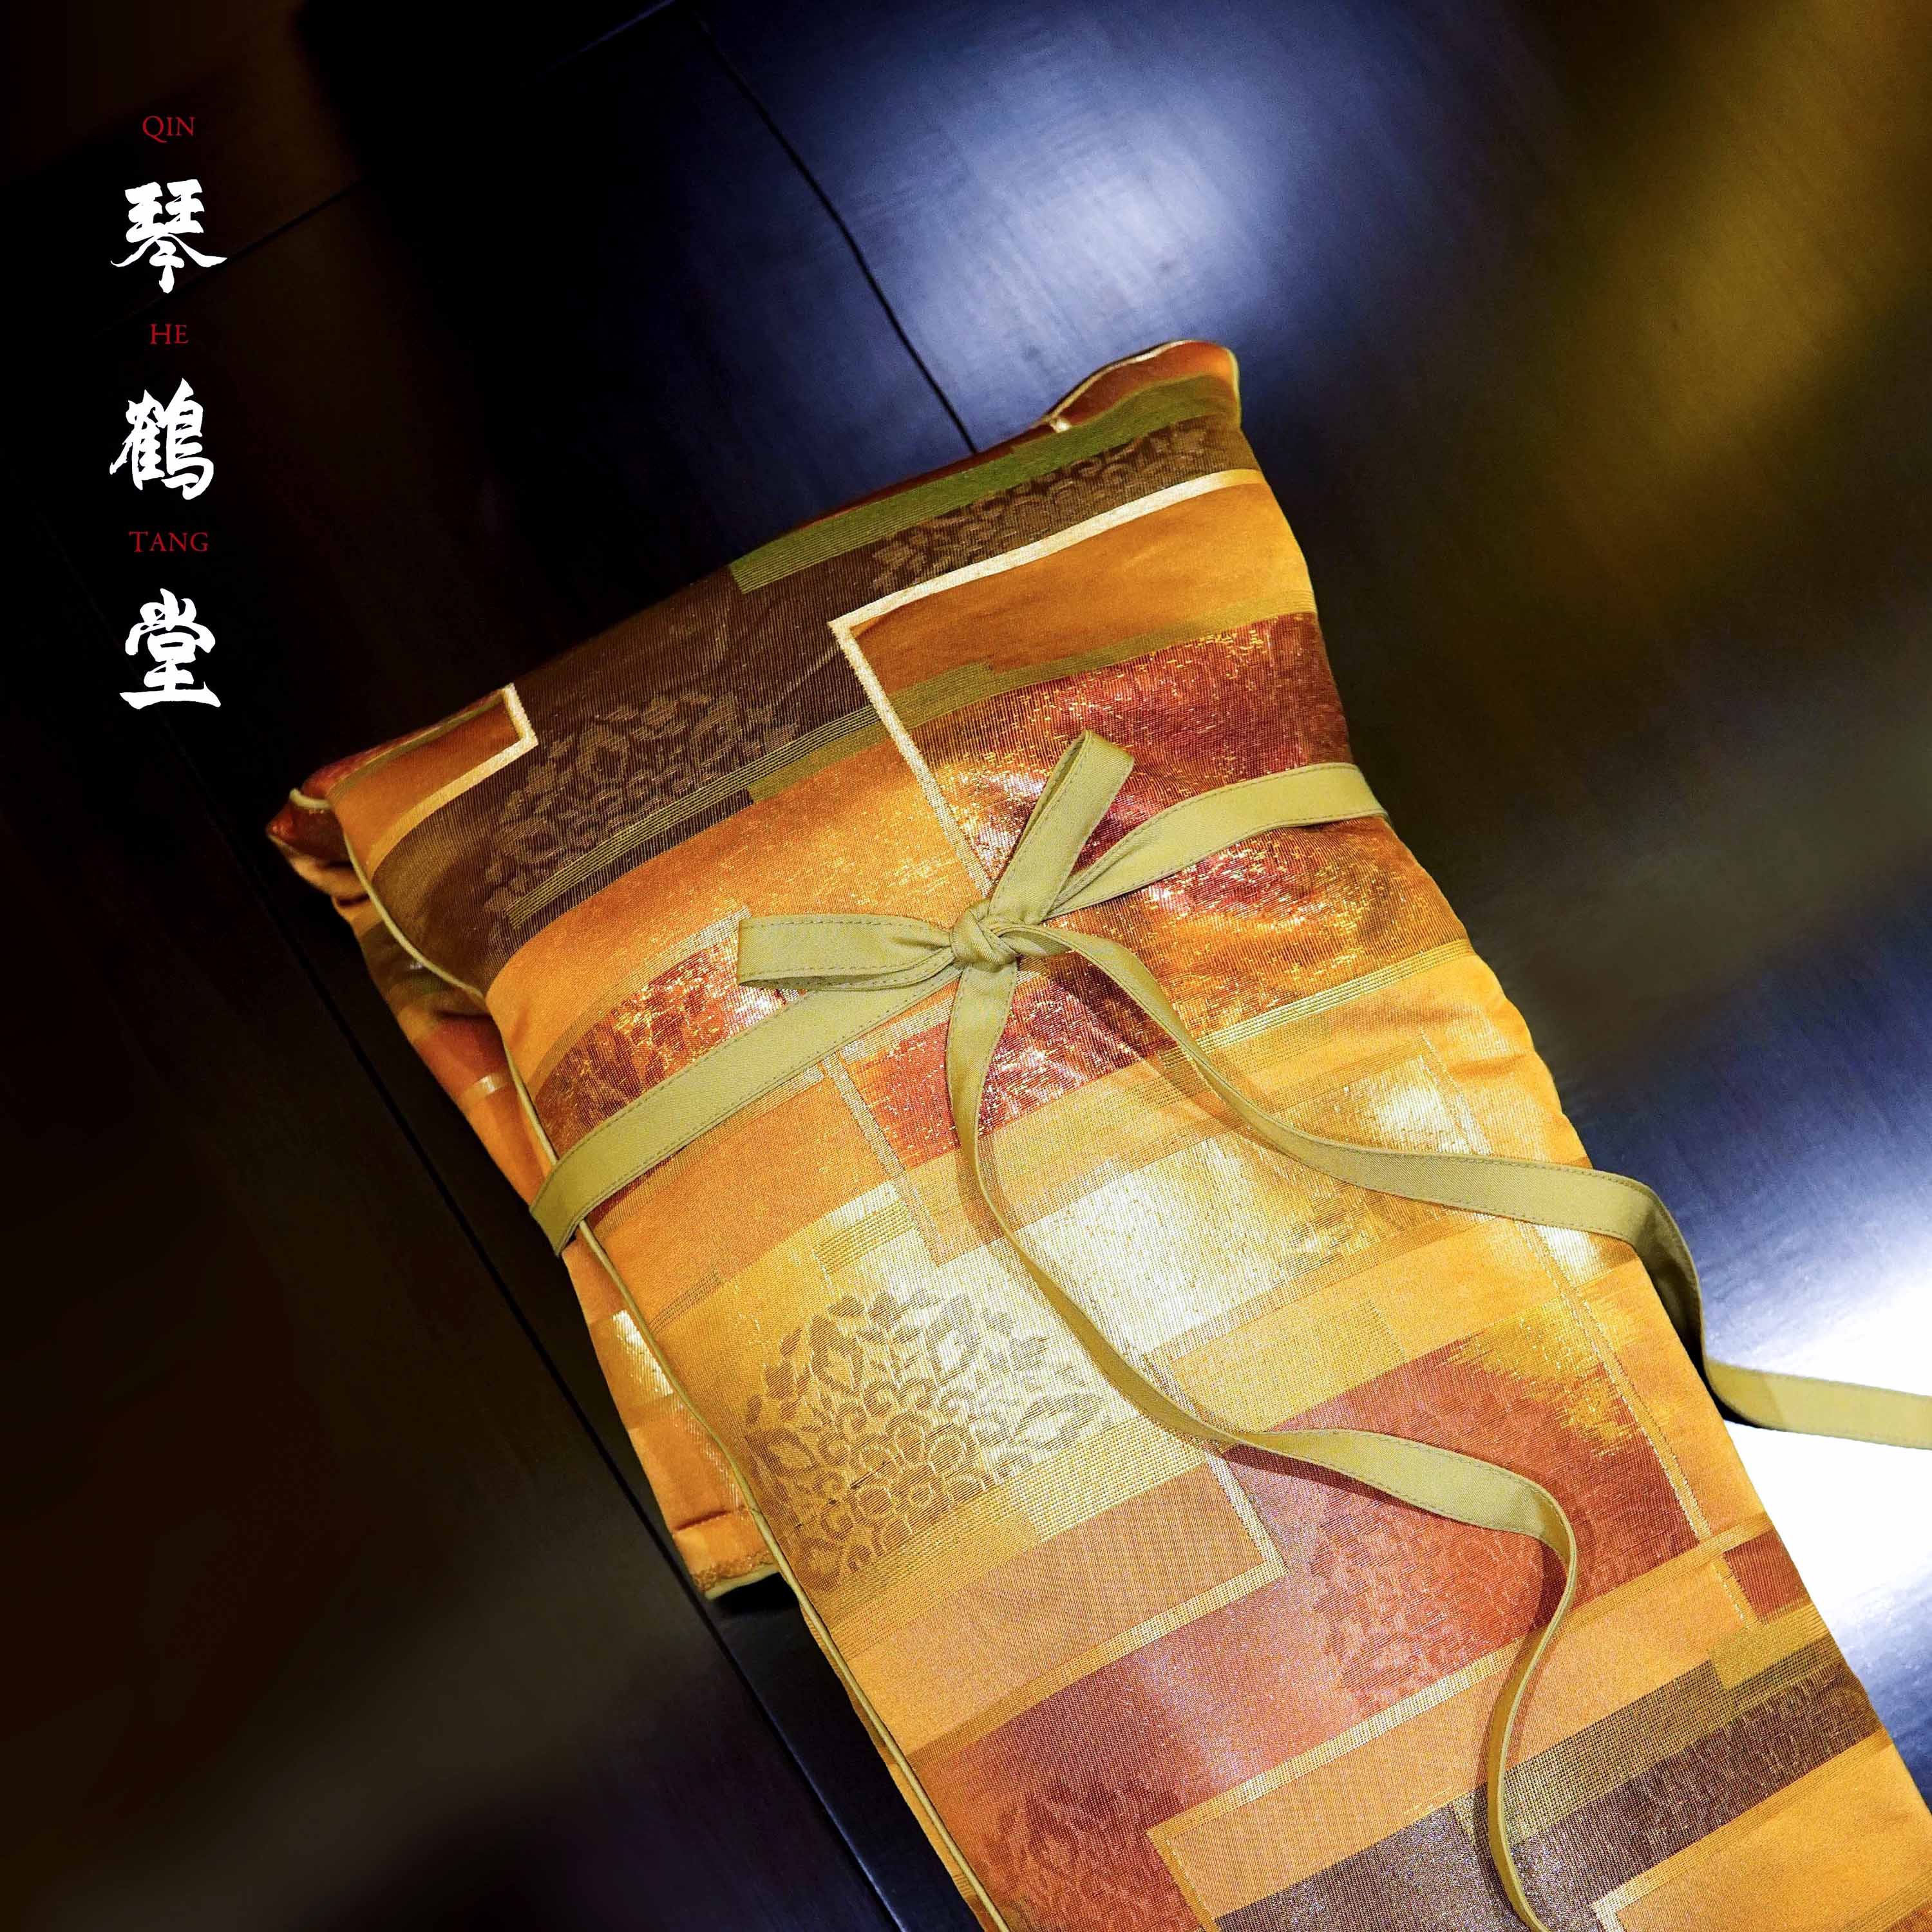 Eternal Elegance" Vintage Silk Brocade Qin Bag - Exquisite Chinese Handcrafted Masterpiece